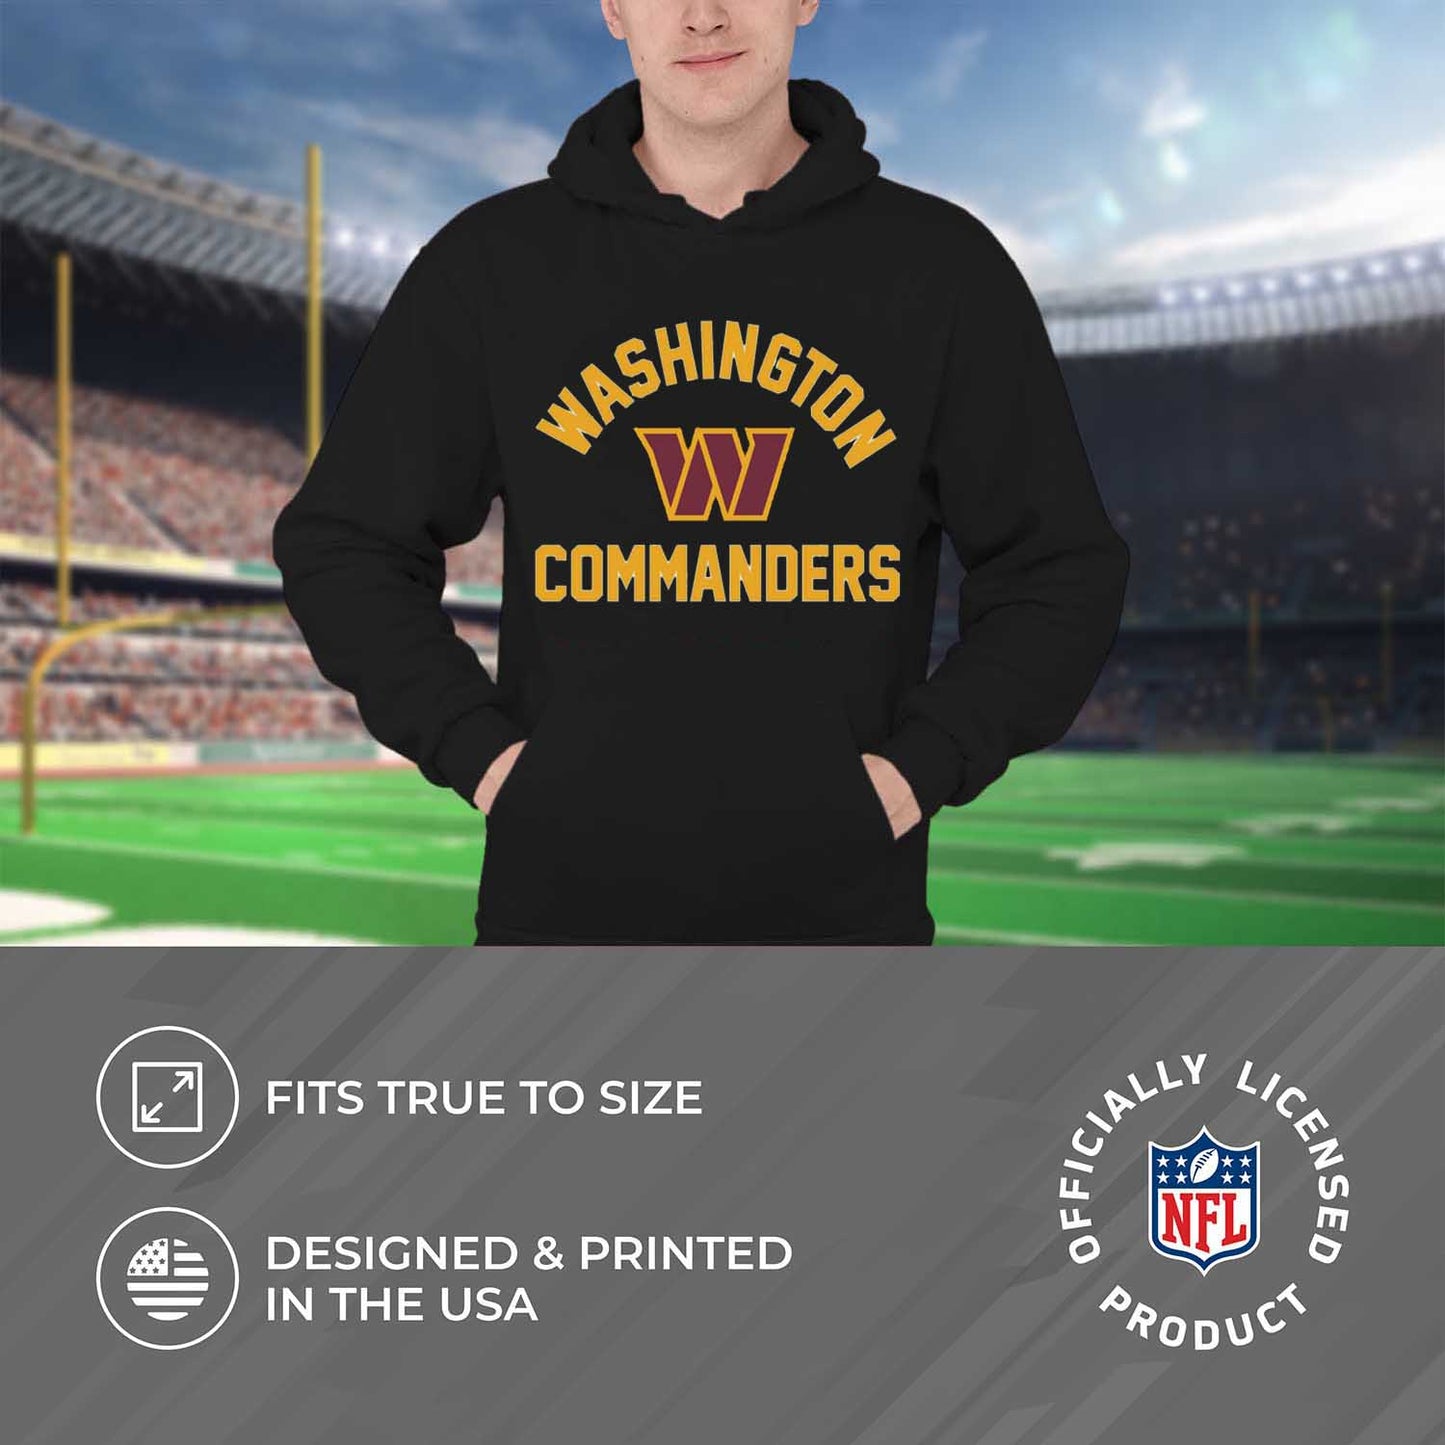 Washington Commanders NFL Adult Gameday Hooded Sweatshirt - Black